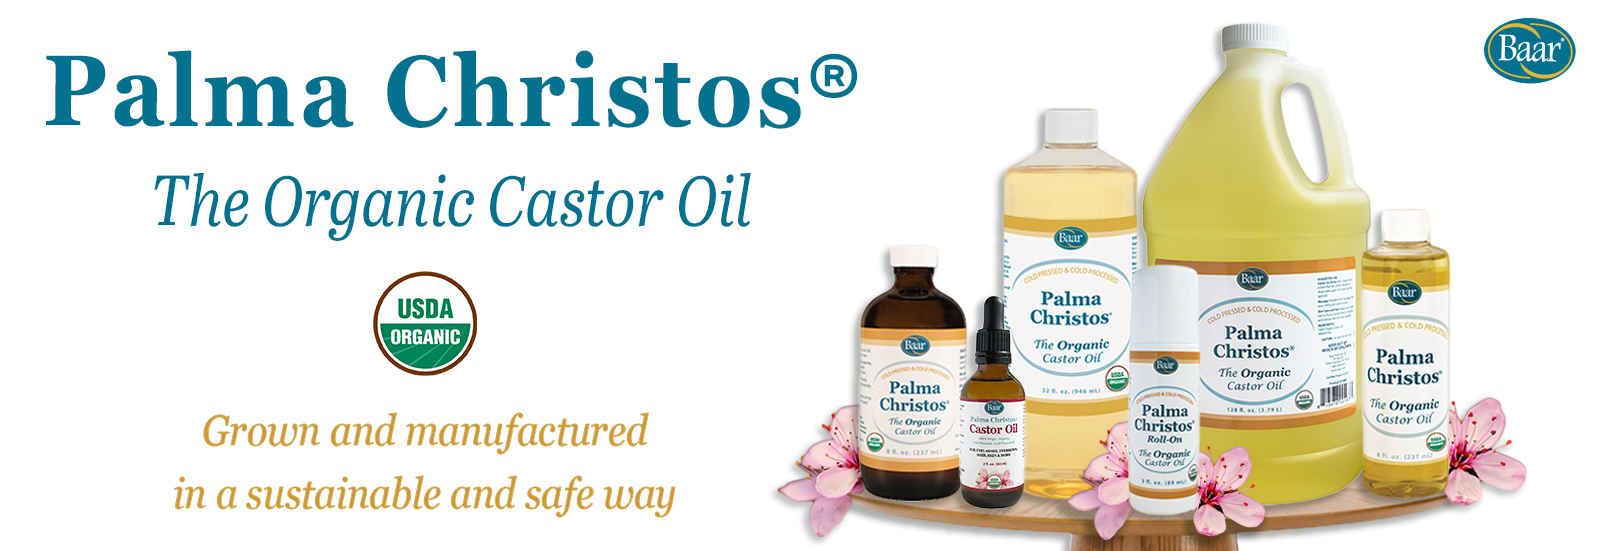 Palma Christos is USDA Certified Organic Castor Oil